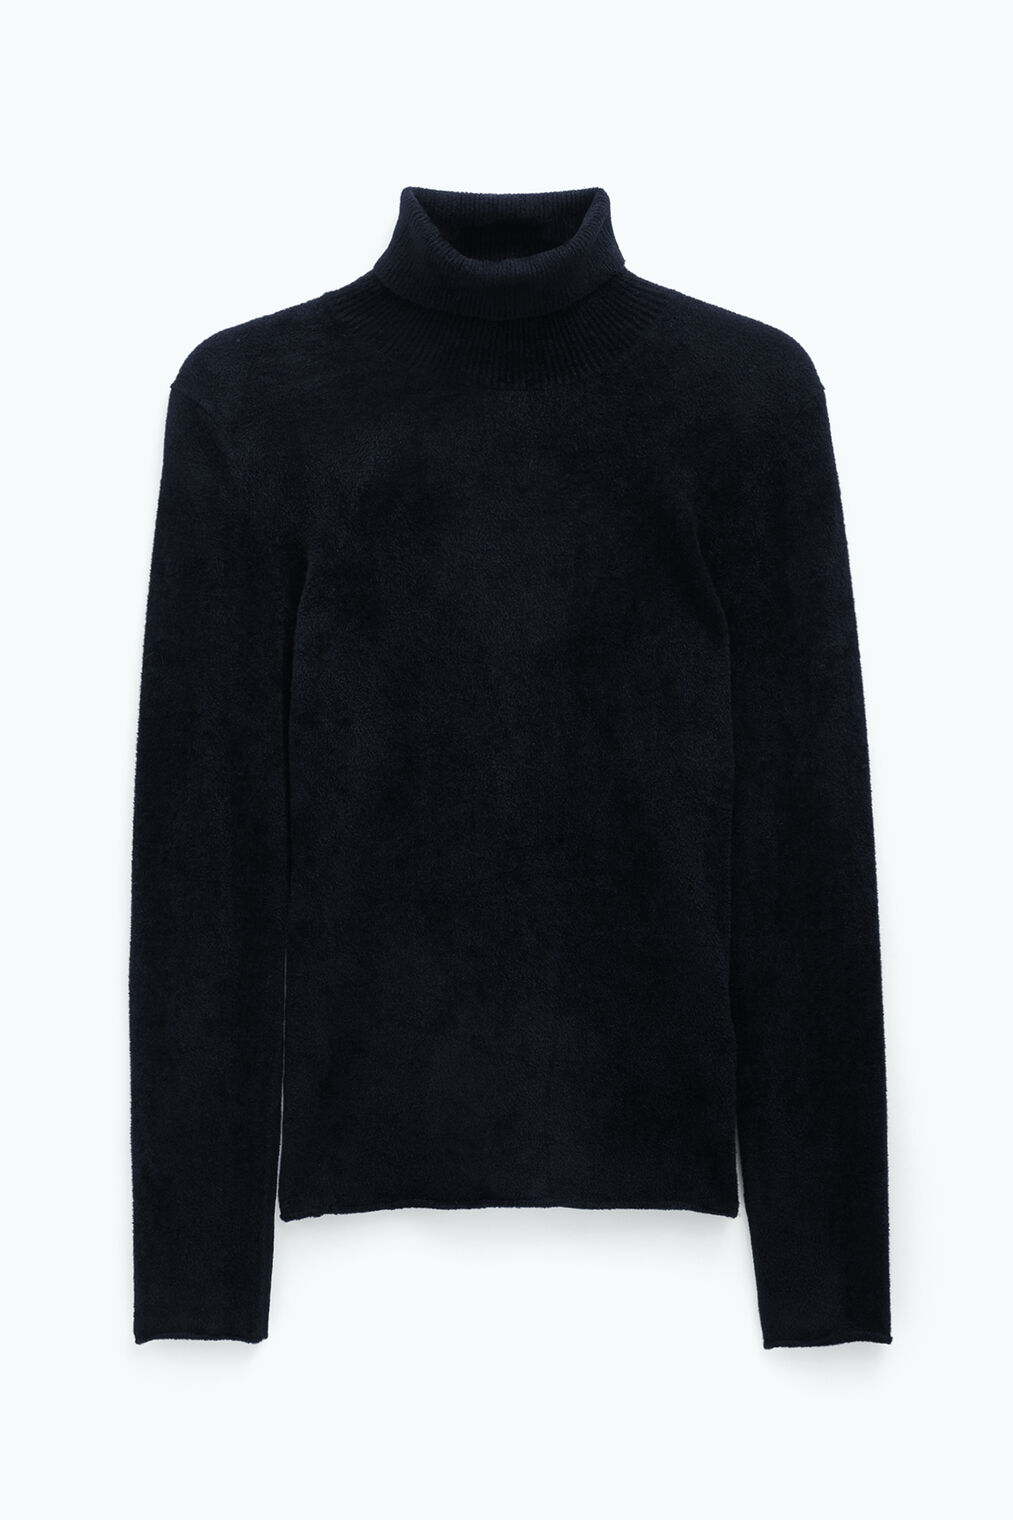 Chenille turtleneck sweater in black